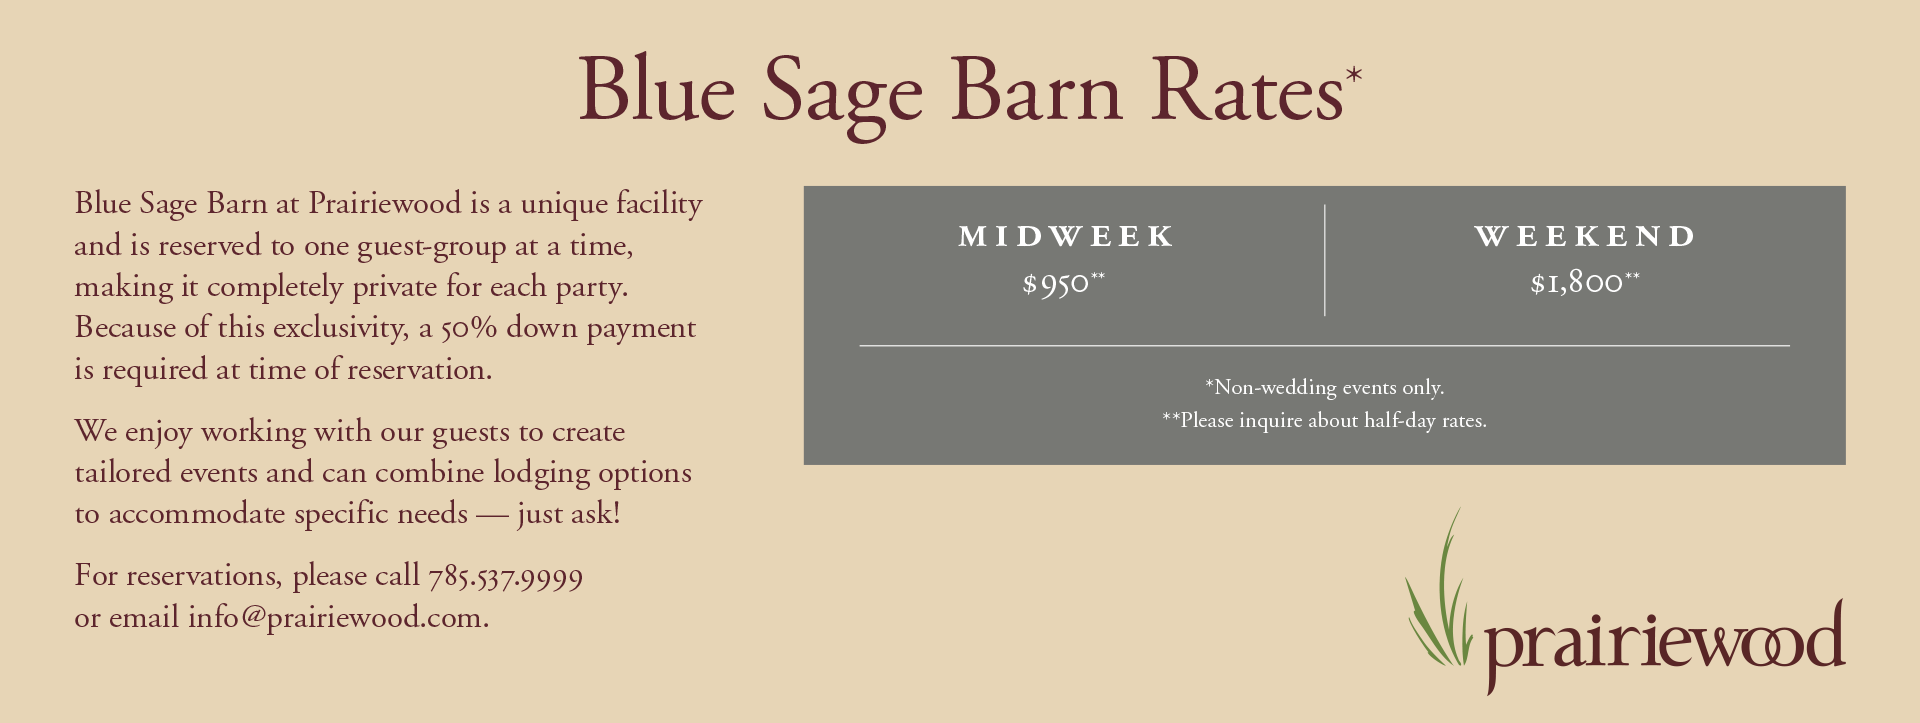 Blue Sage Barn Rates